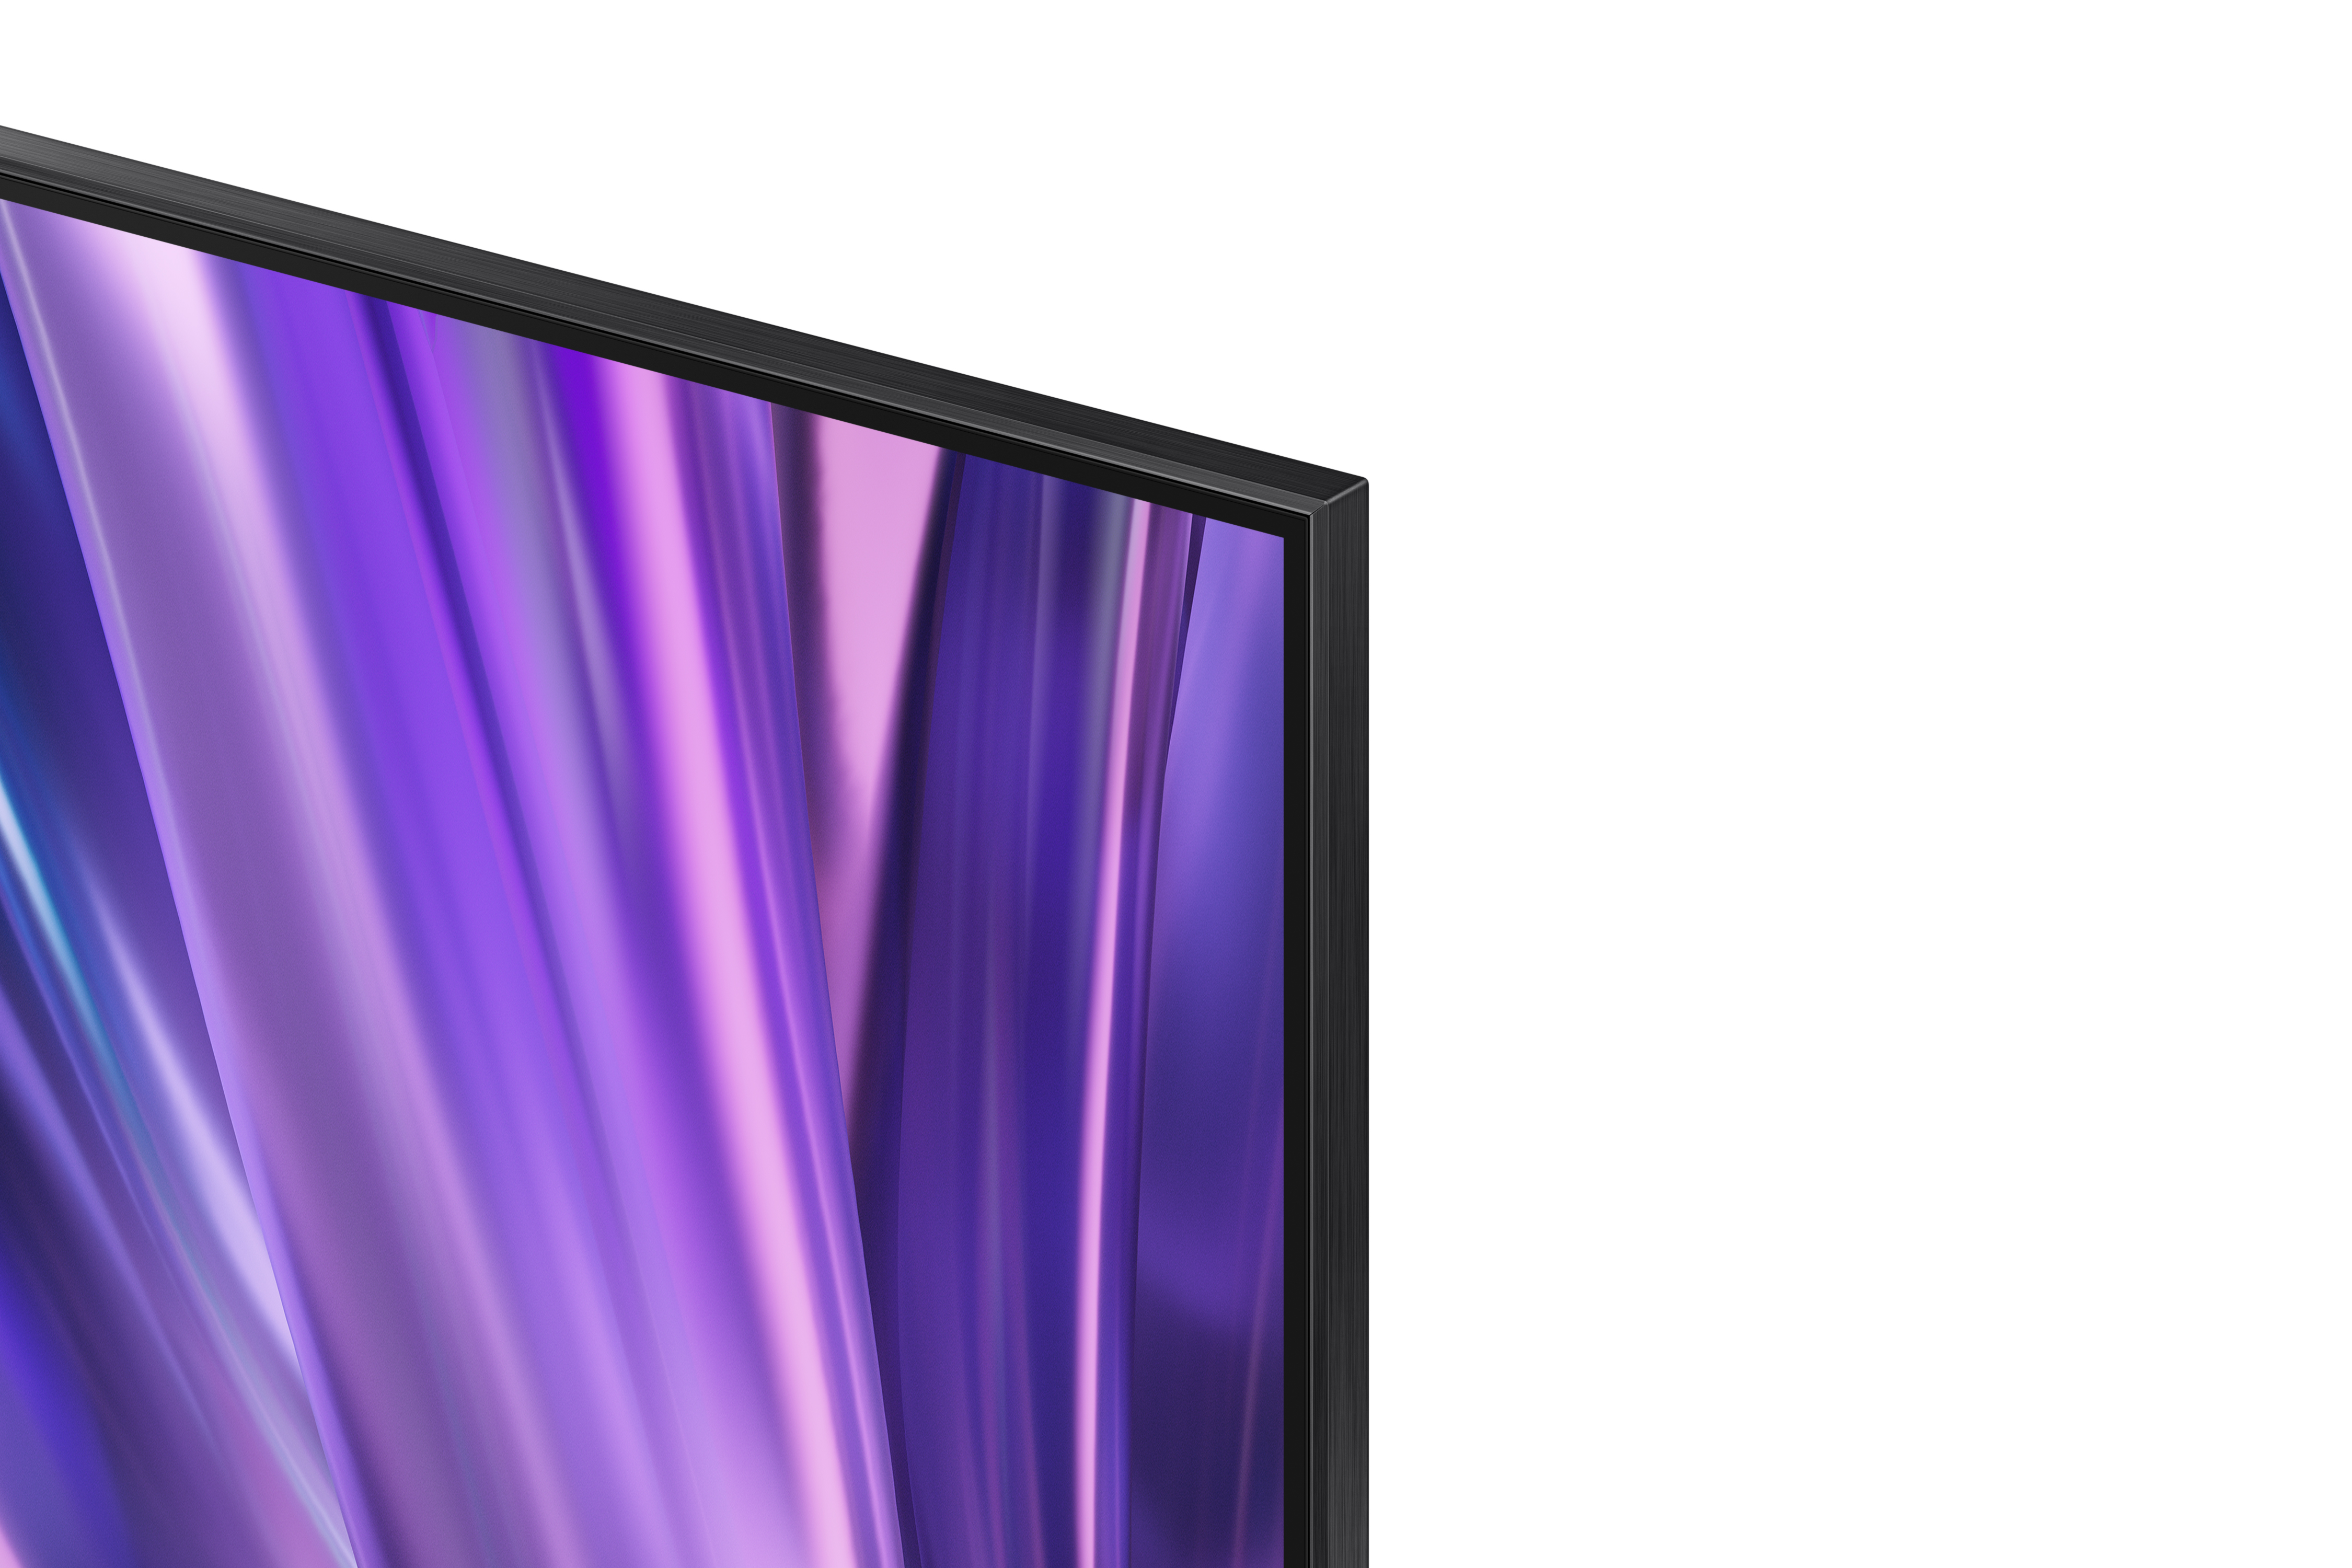 NEO QLED Tivi 4K Samsung 65 inch 65QN85D Smart TV